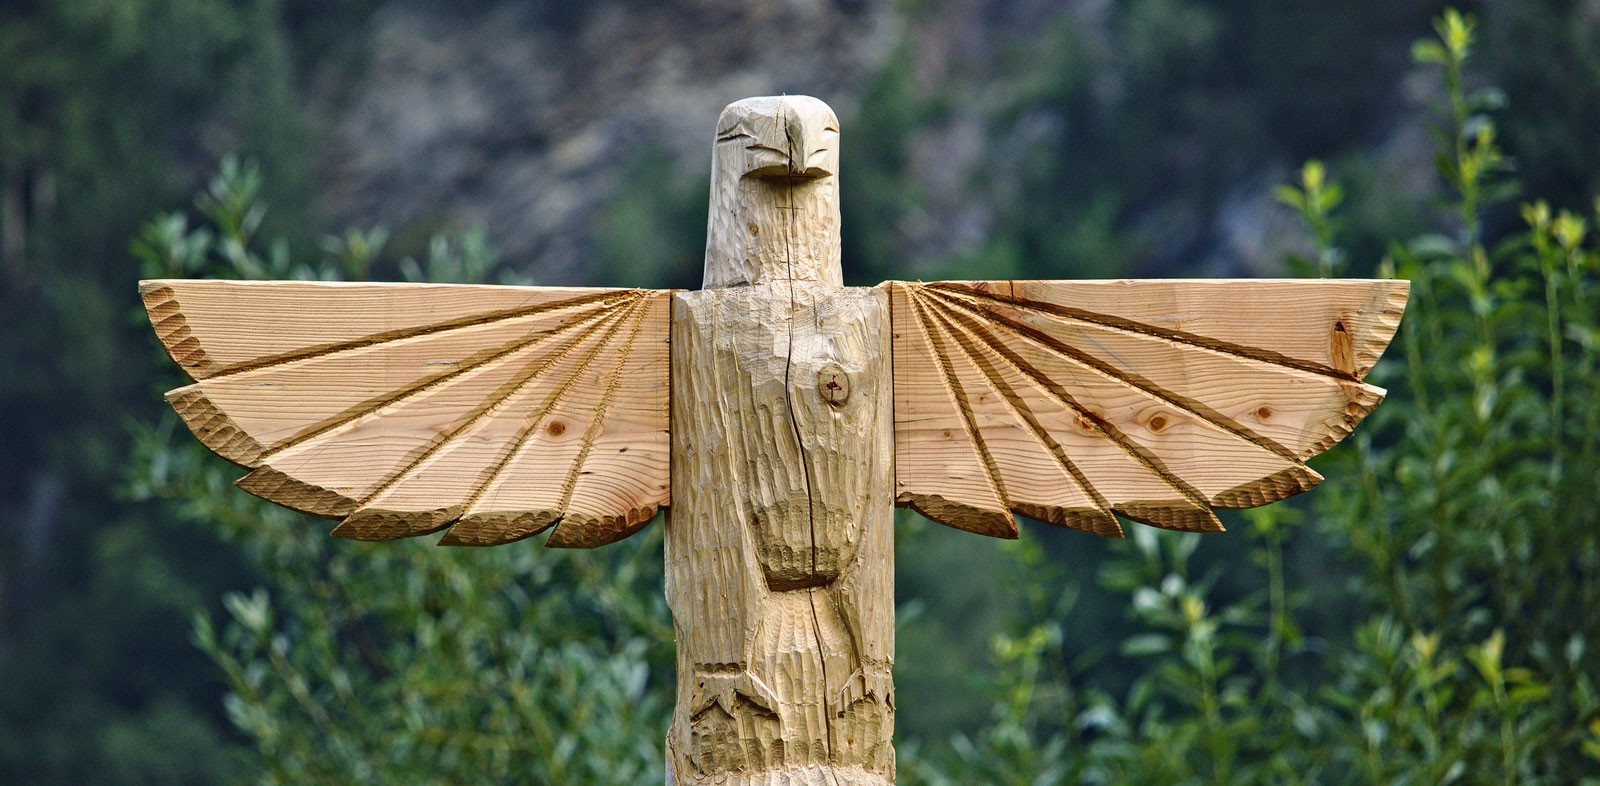 Thunderbird native american symbol meaning